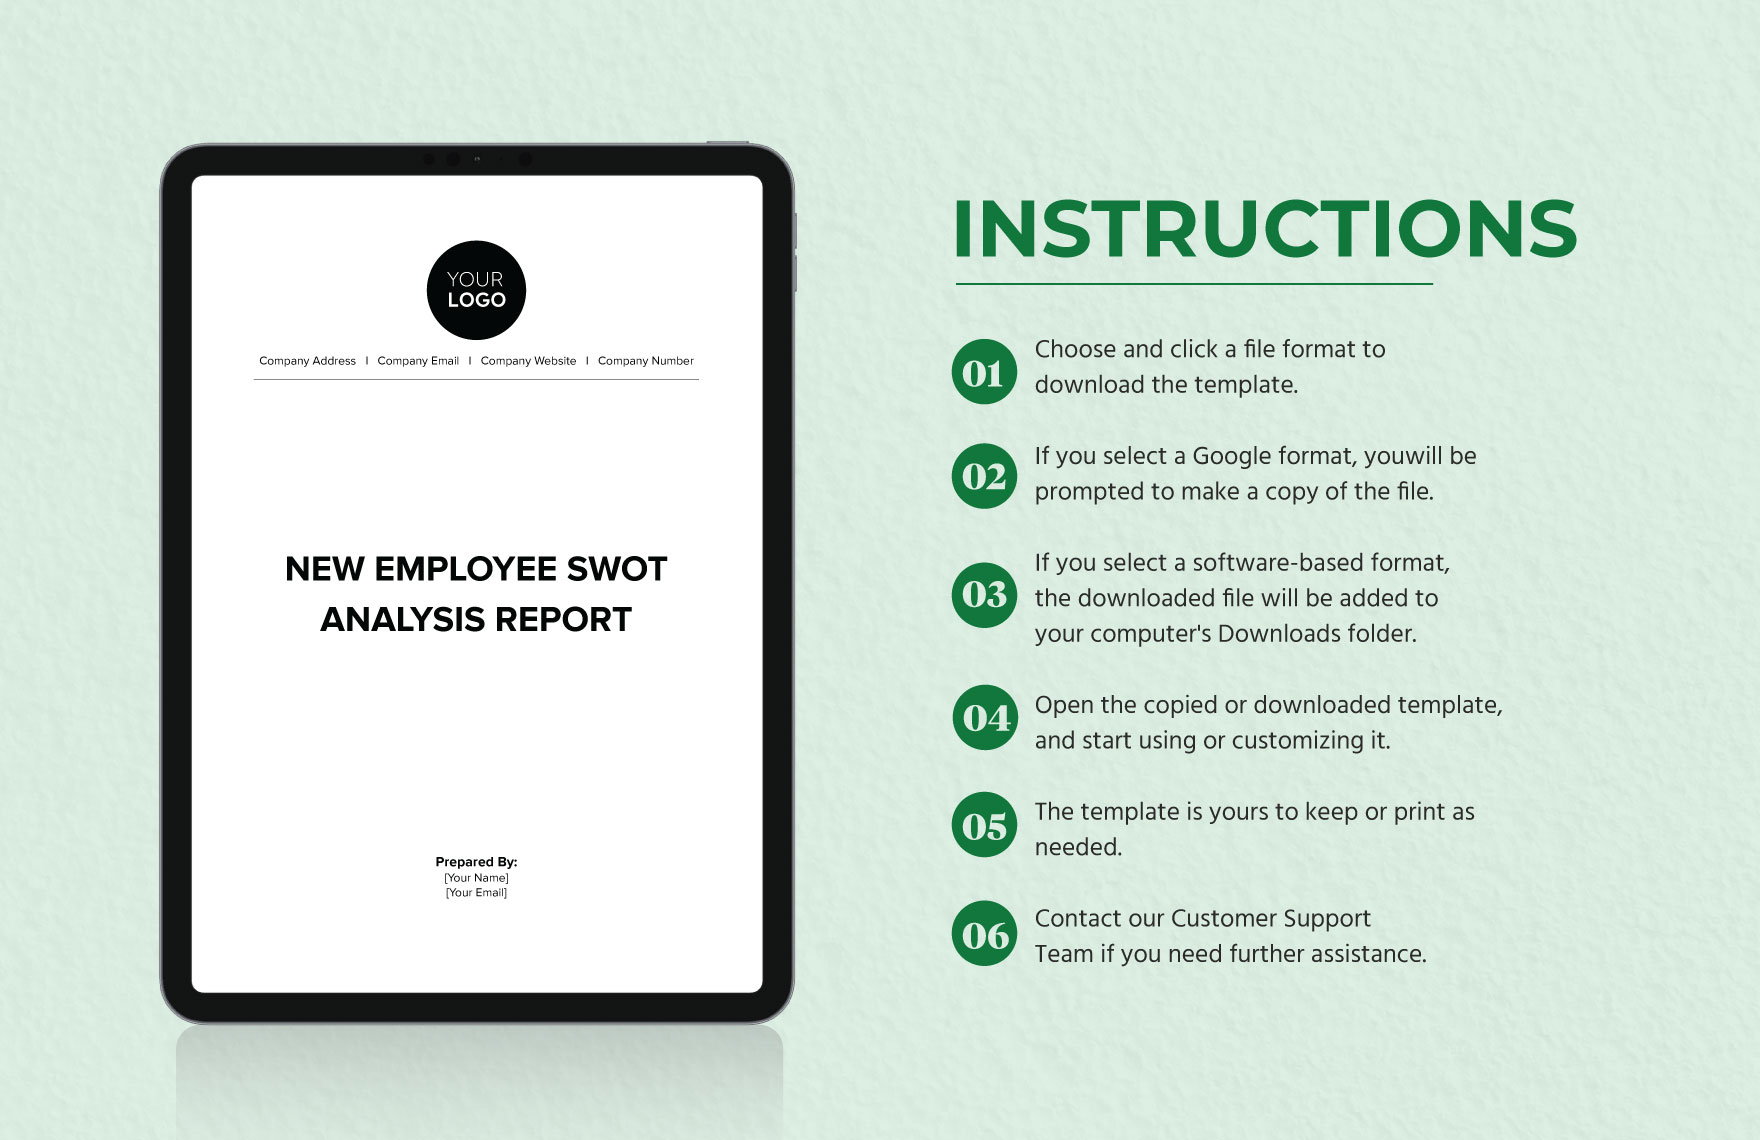 New Employee SWOT Analysis Report HR Template